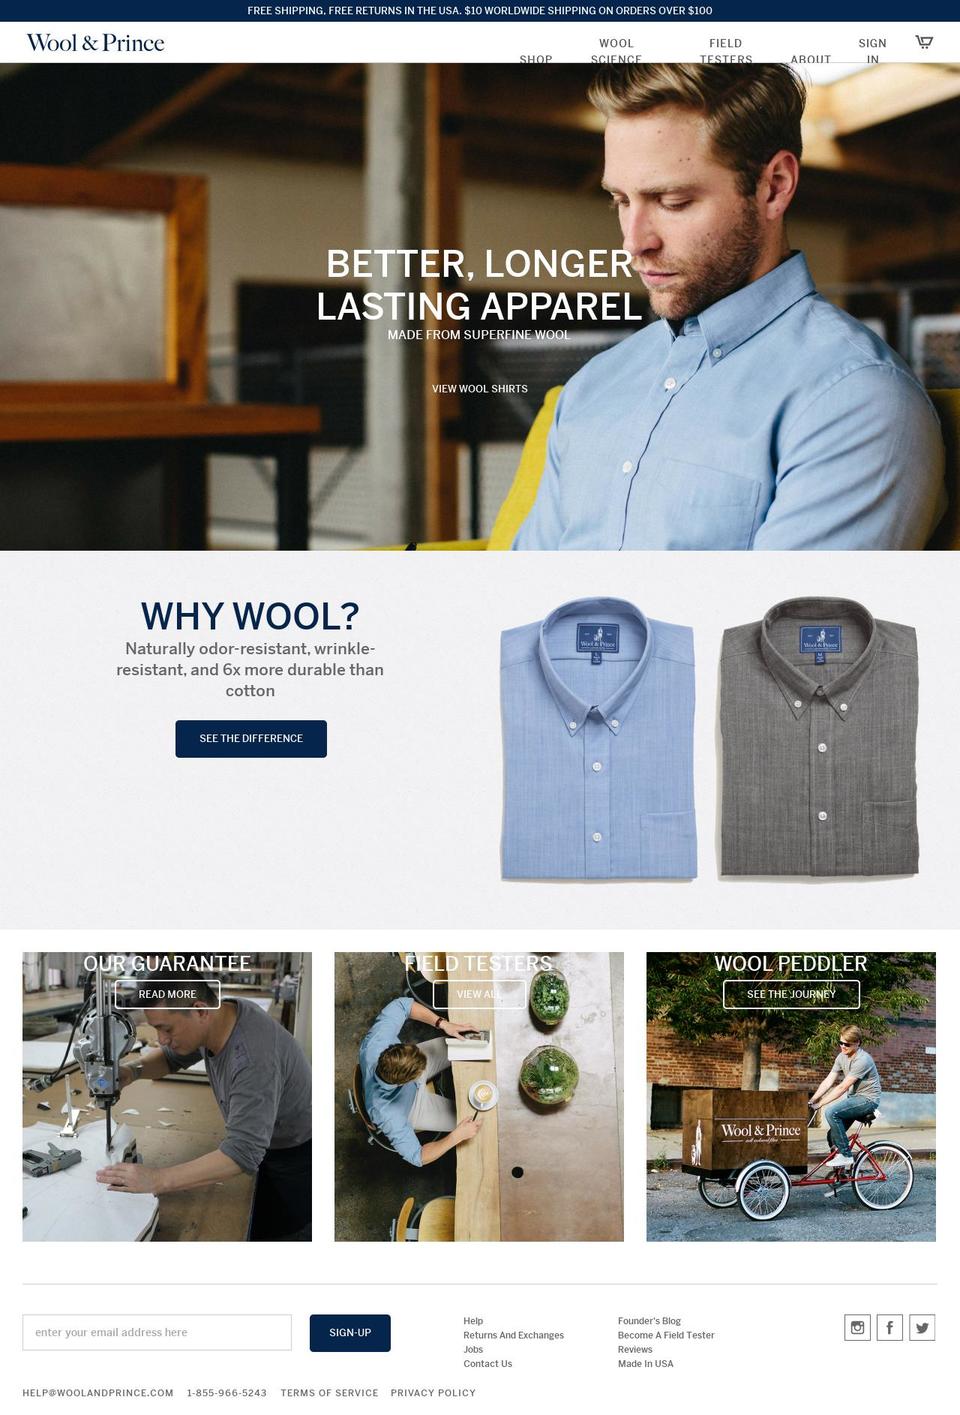 woolandprince.com shopify website screenshot